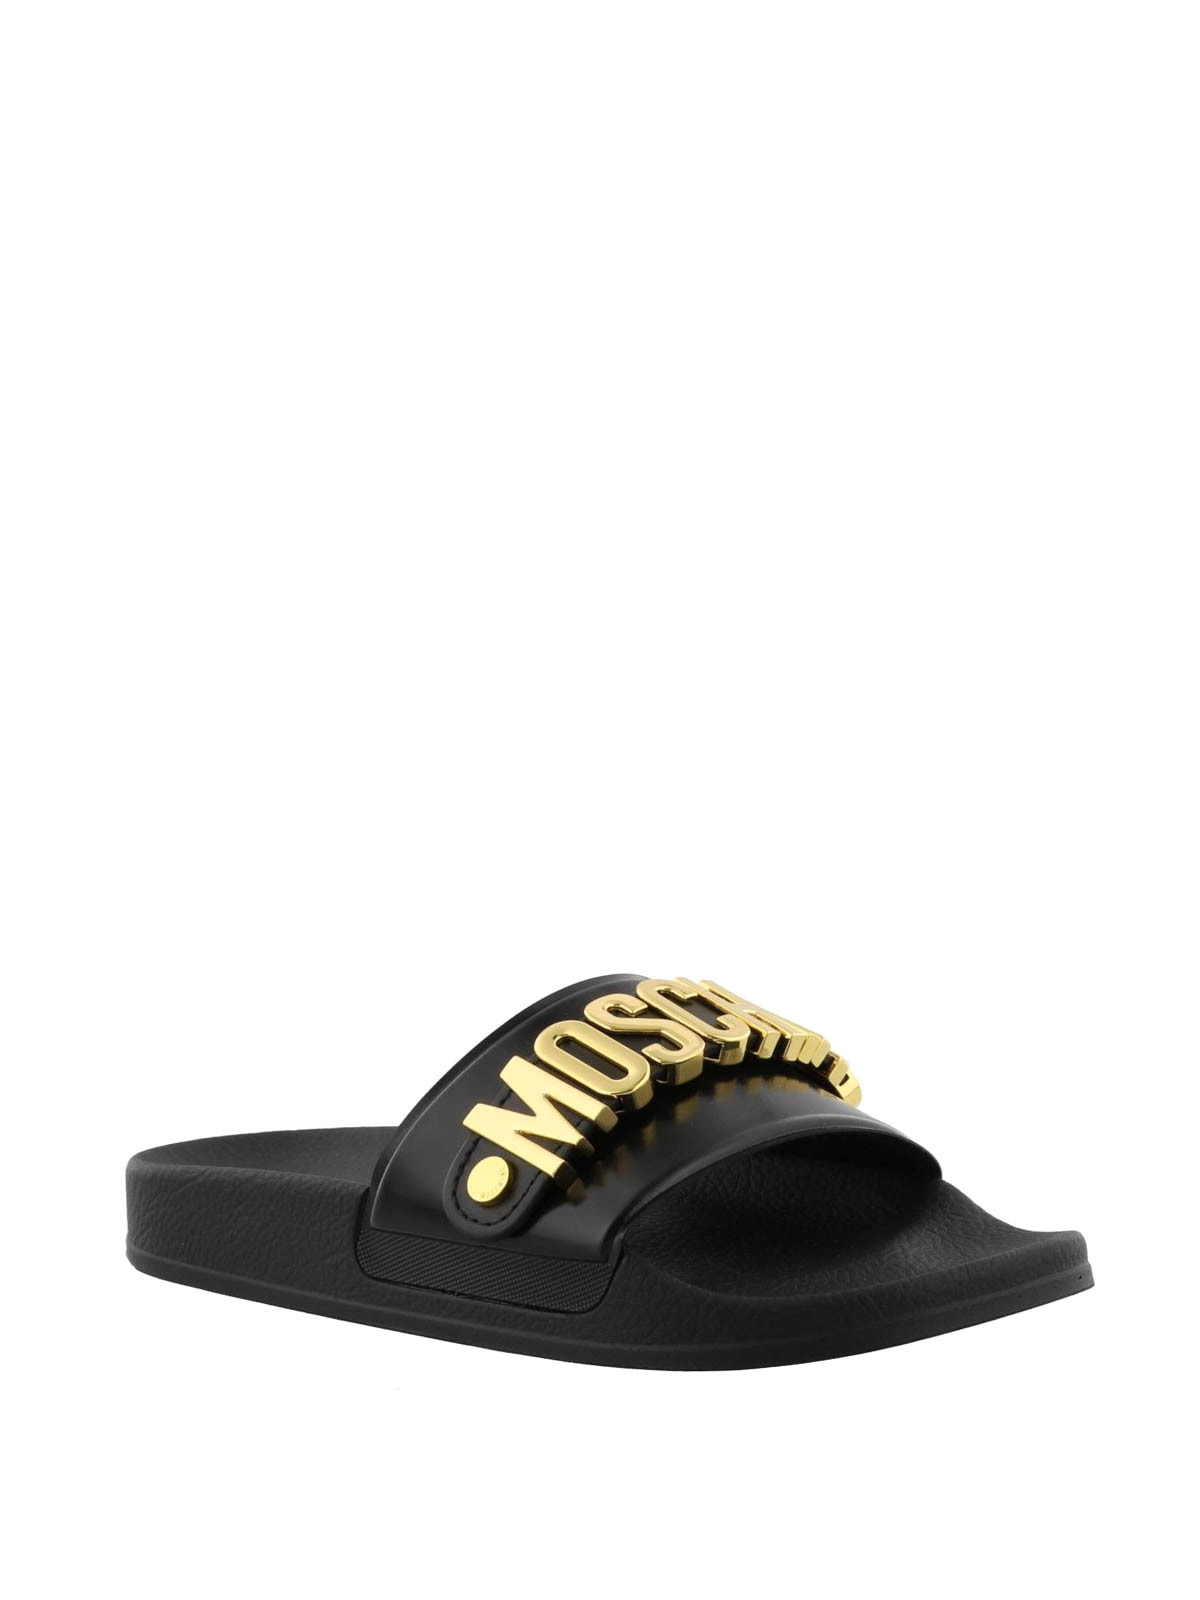 Moschino - Gold-tone logo slide sandals 